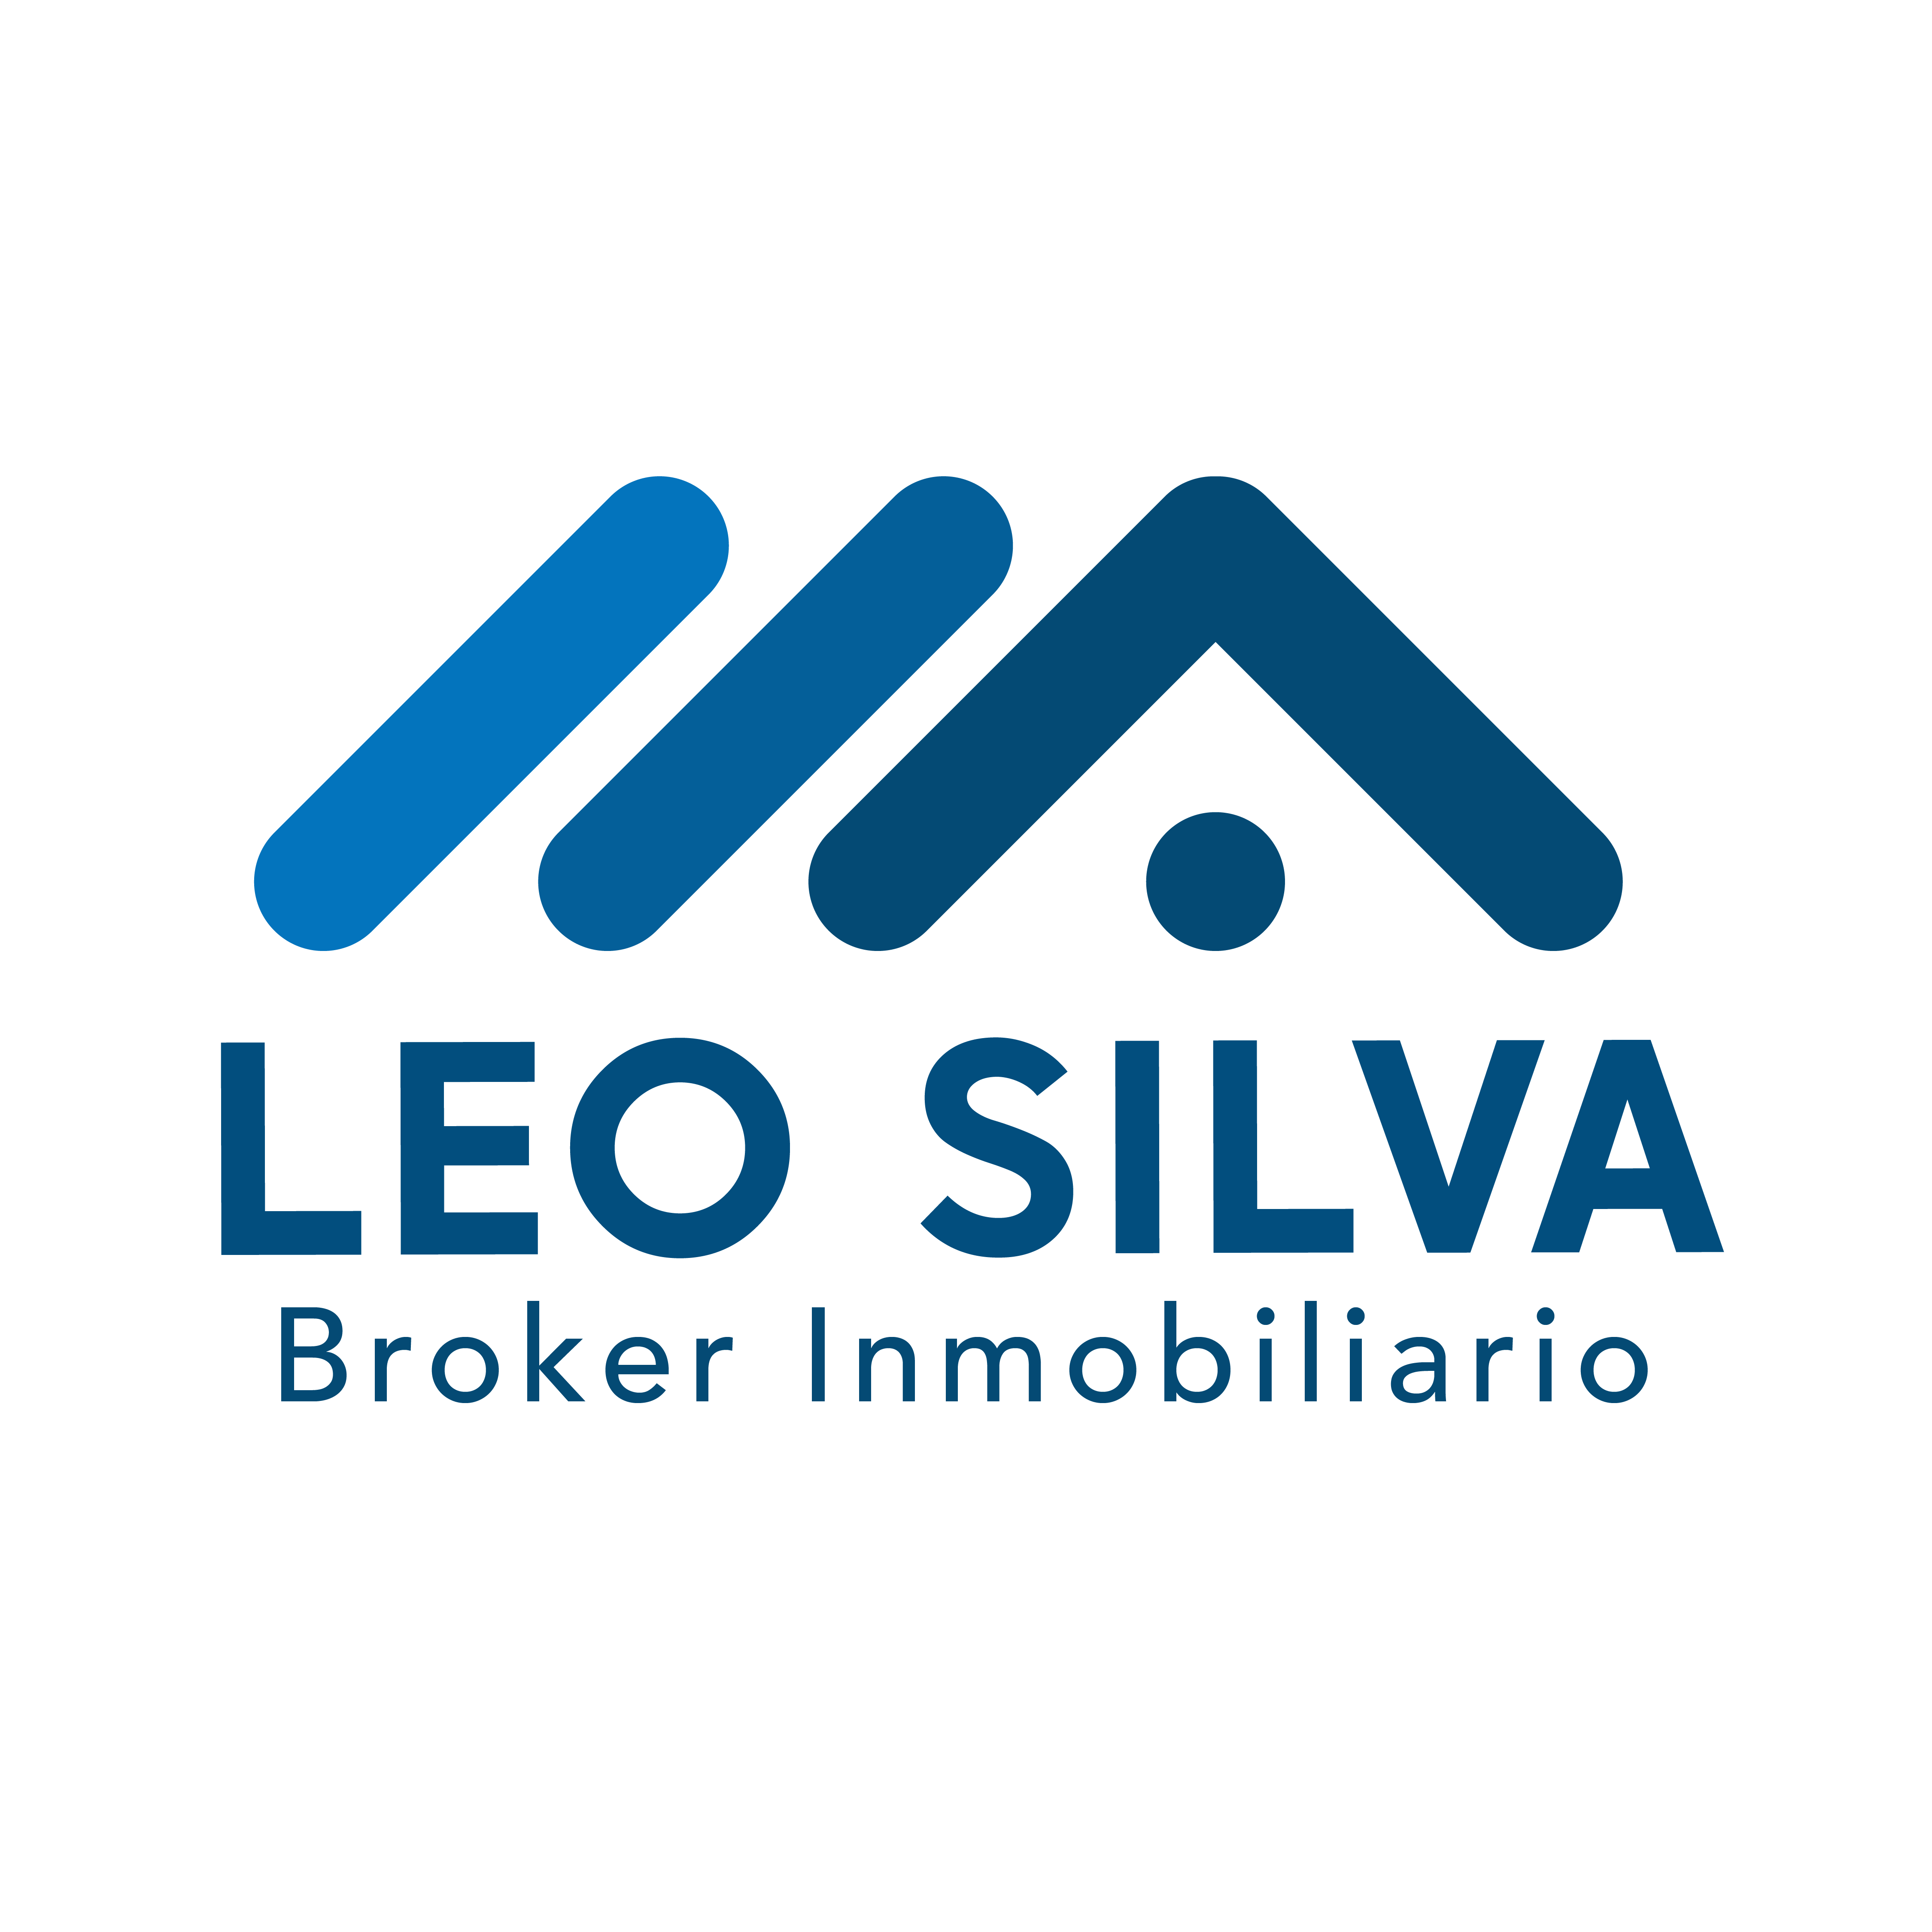 Leo Silva Broker Inmobiliario